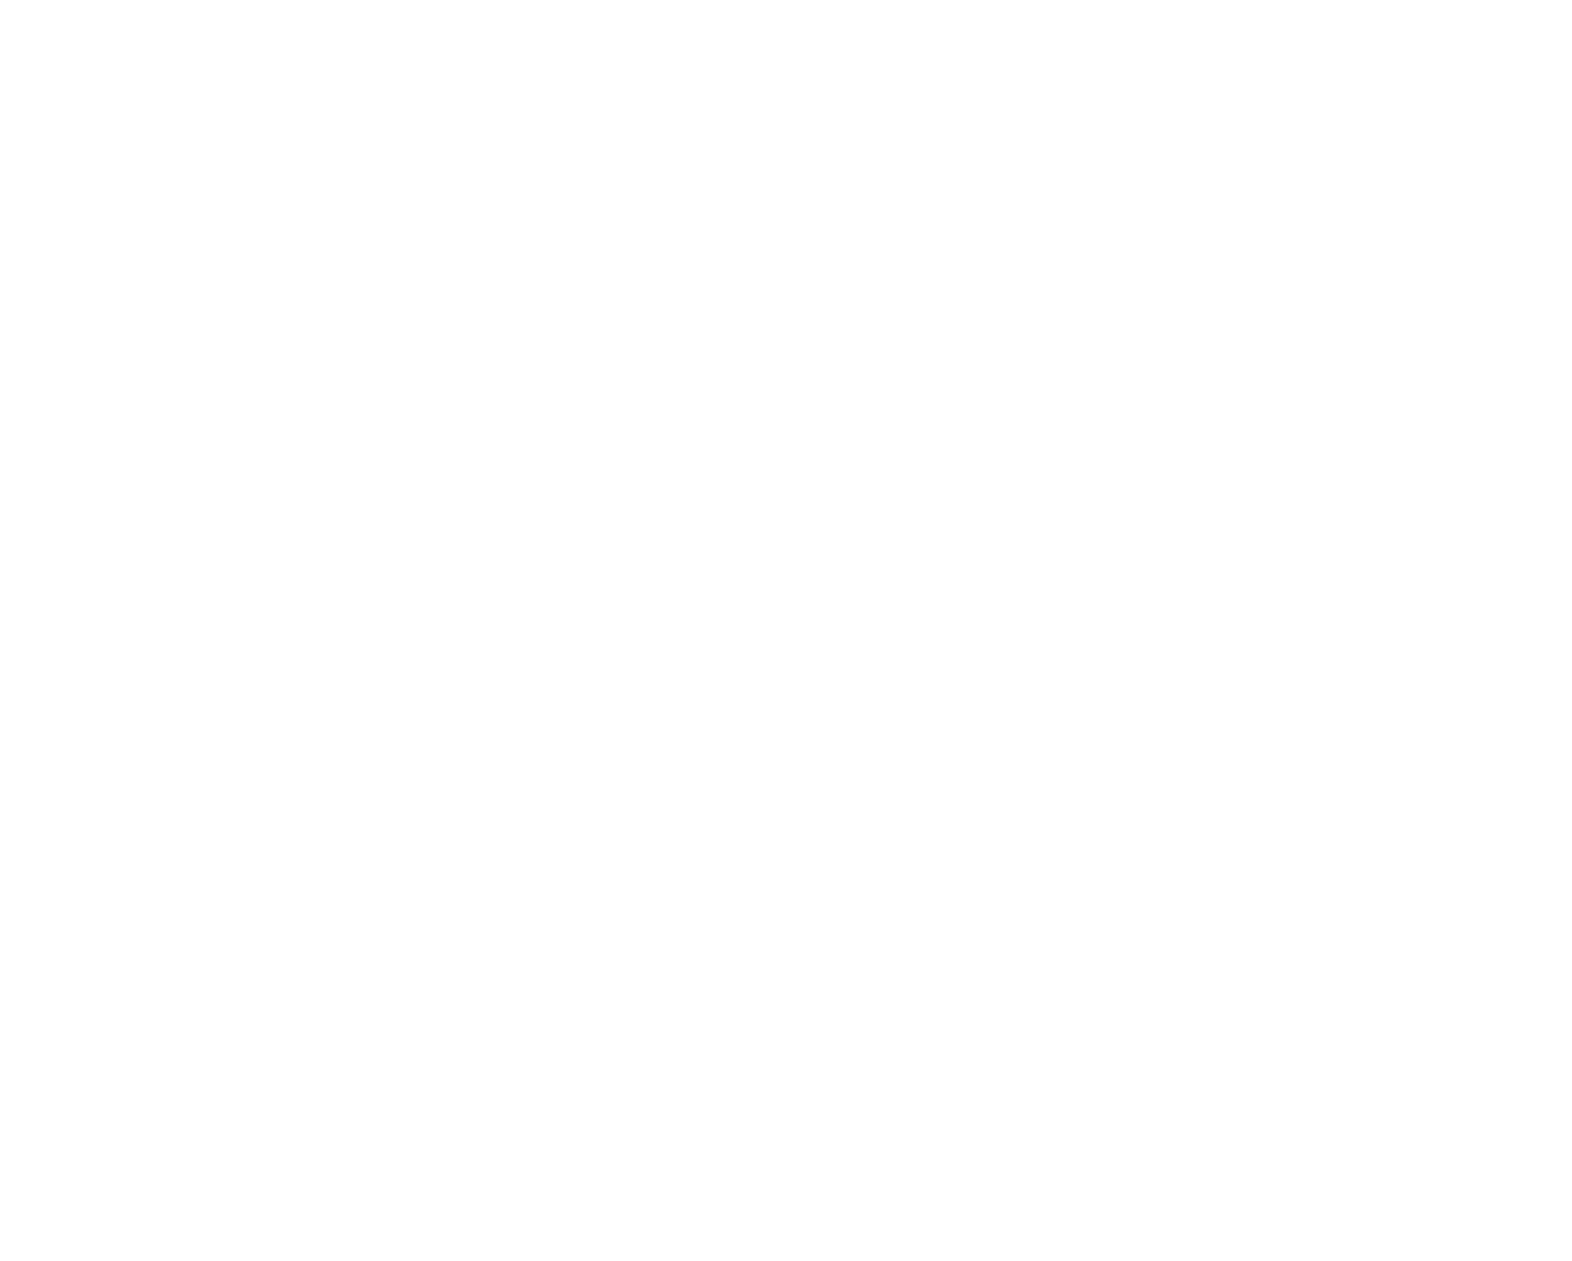 55Clicks, Digital Marketing Agency, Make Every Click Count